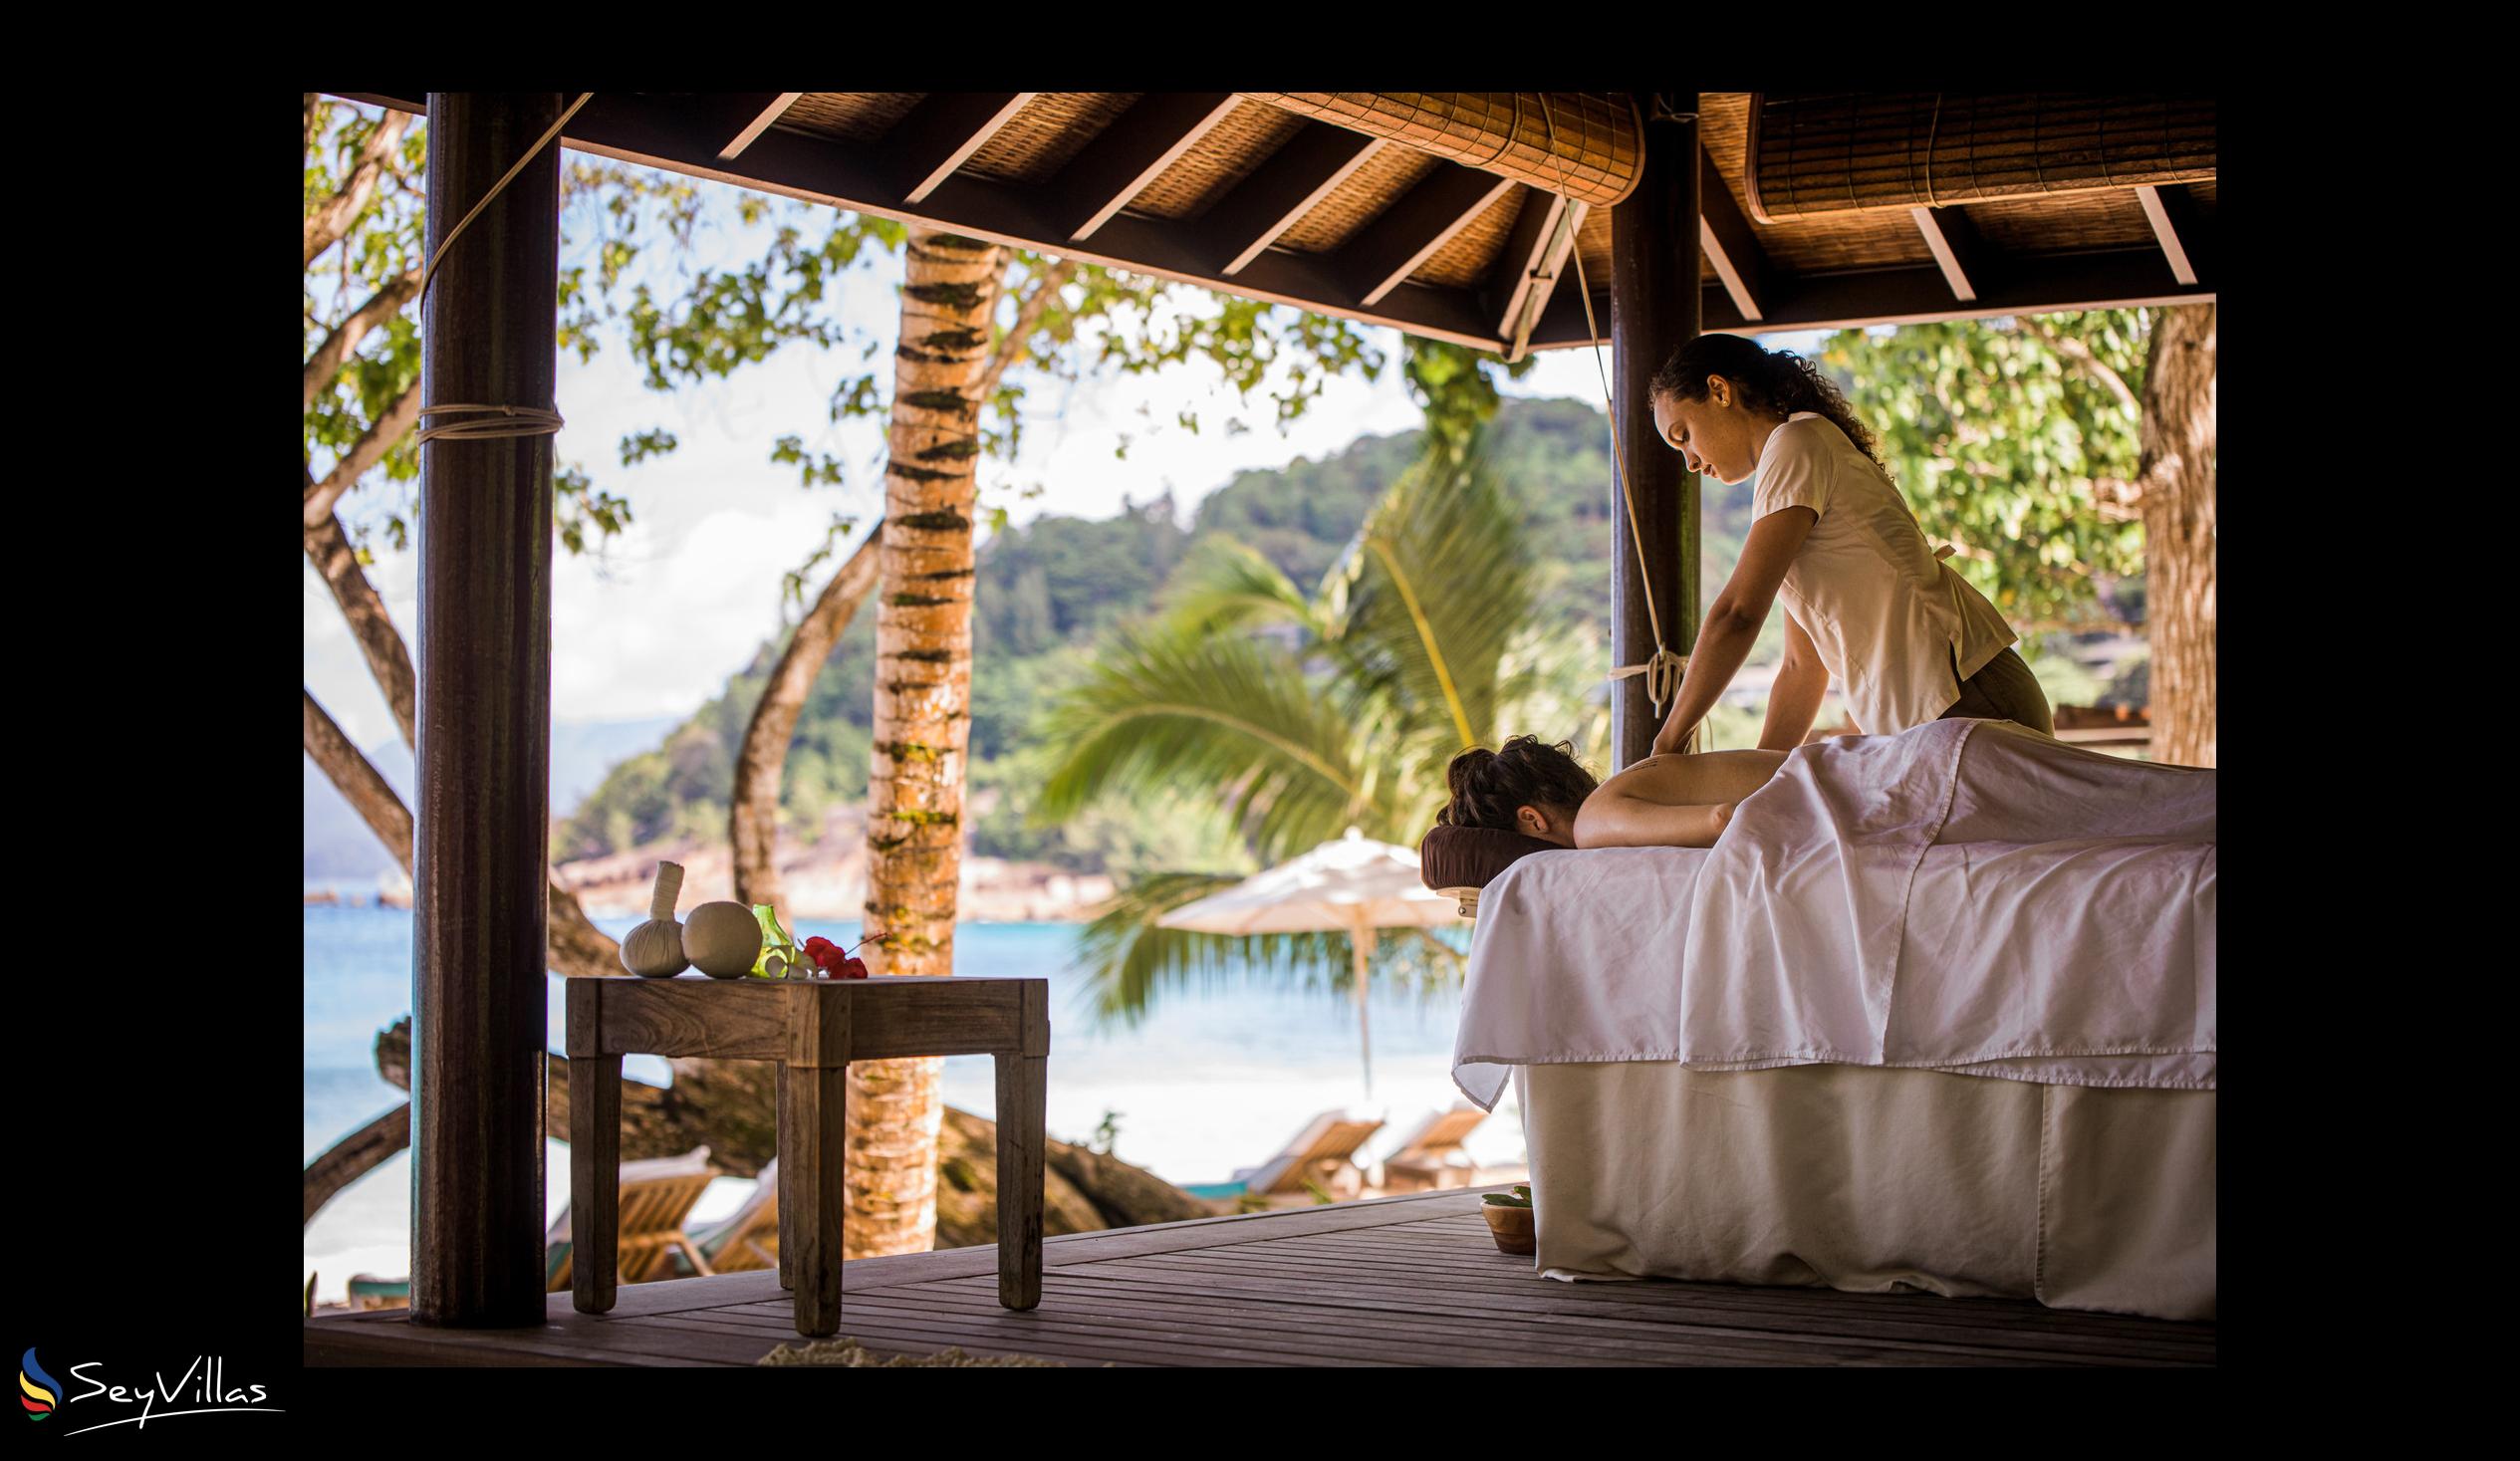 Photo 22: Four Seasons Resort - Indoor area - Mahé (Seychelles)